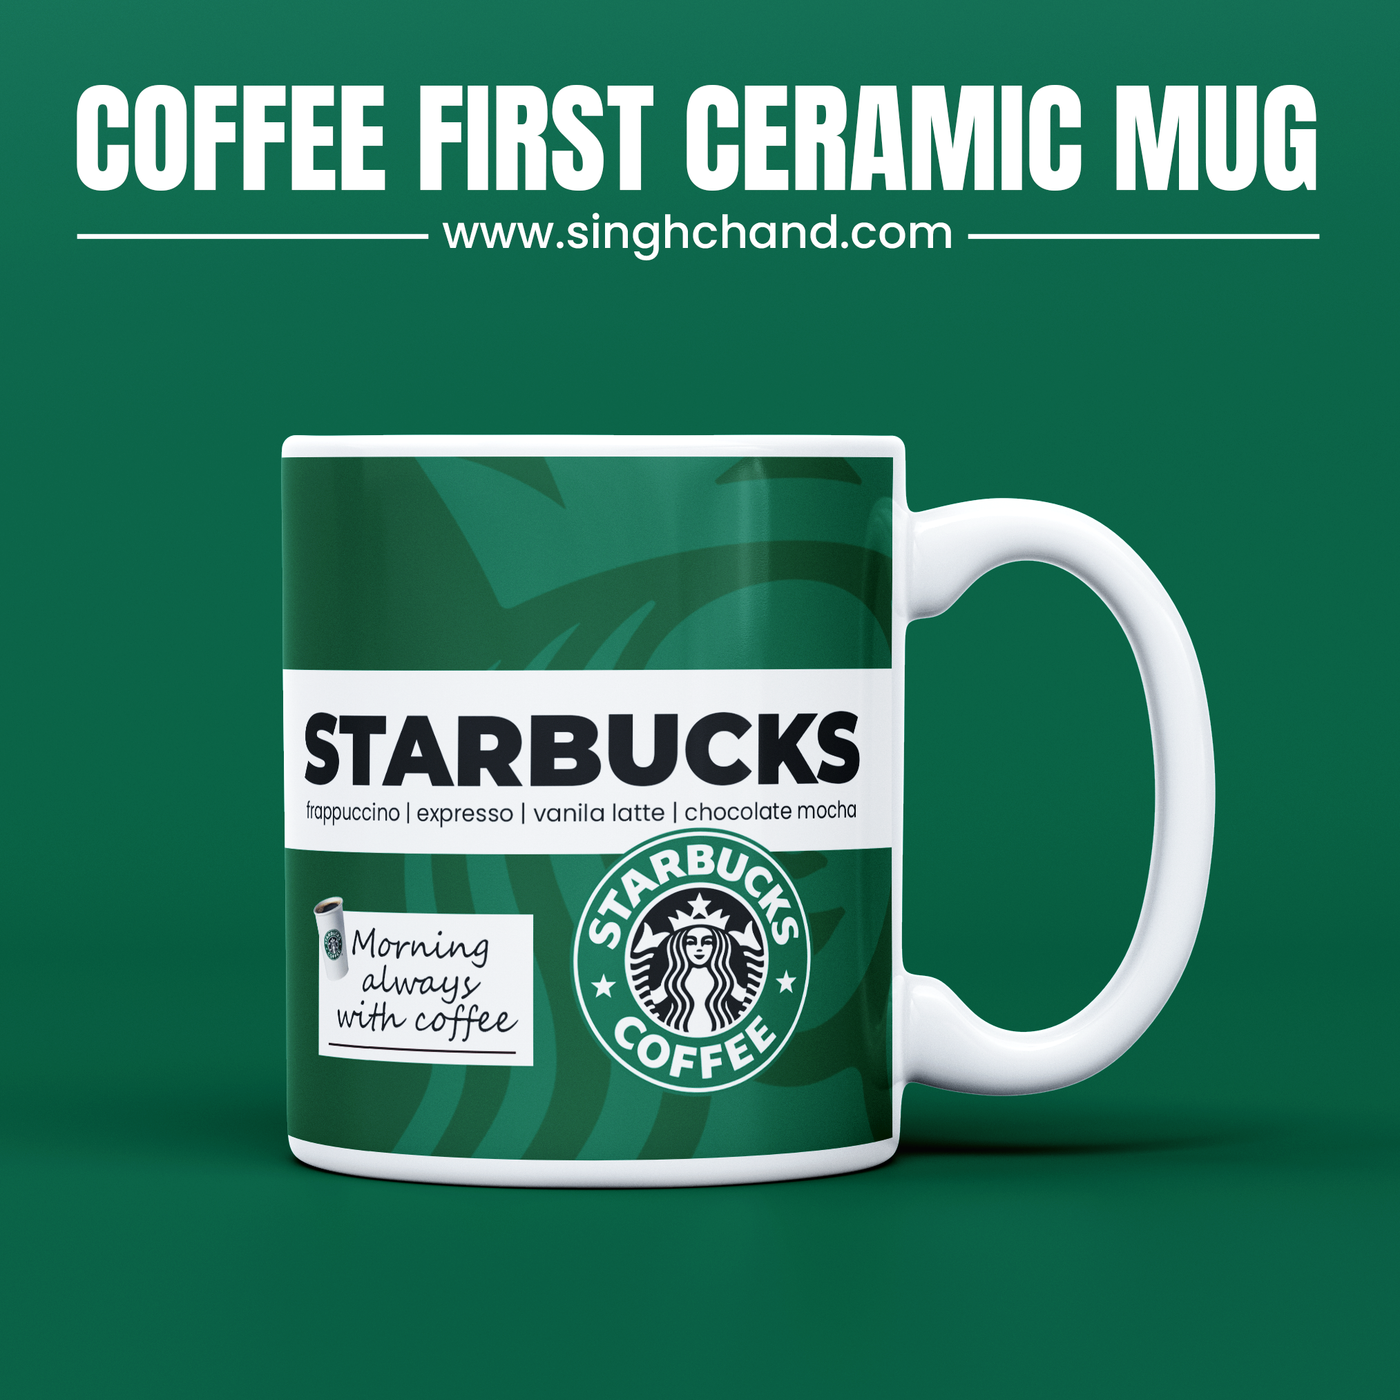 COFFEE FIRST CERAMIC MUG